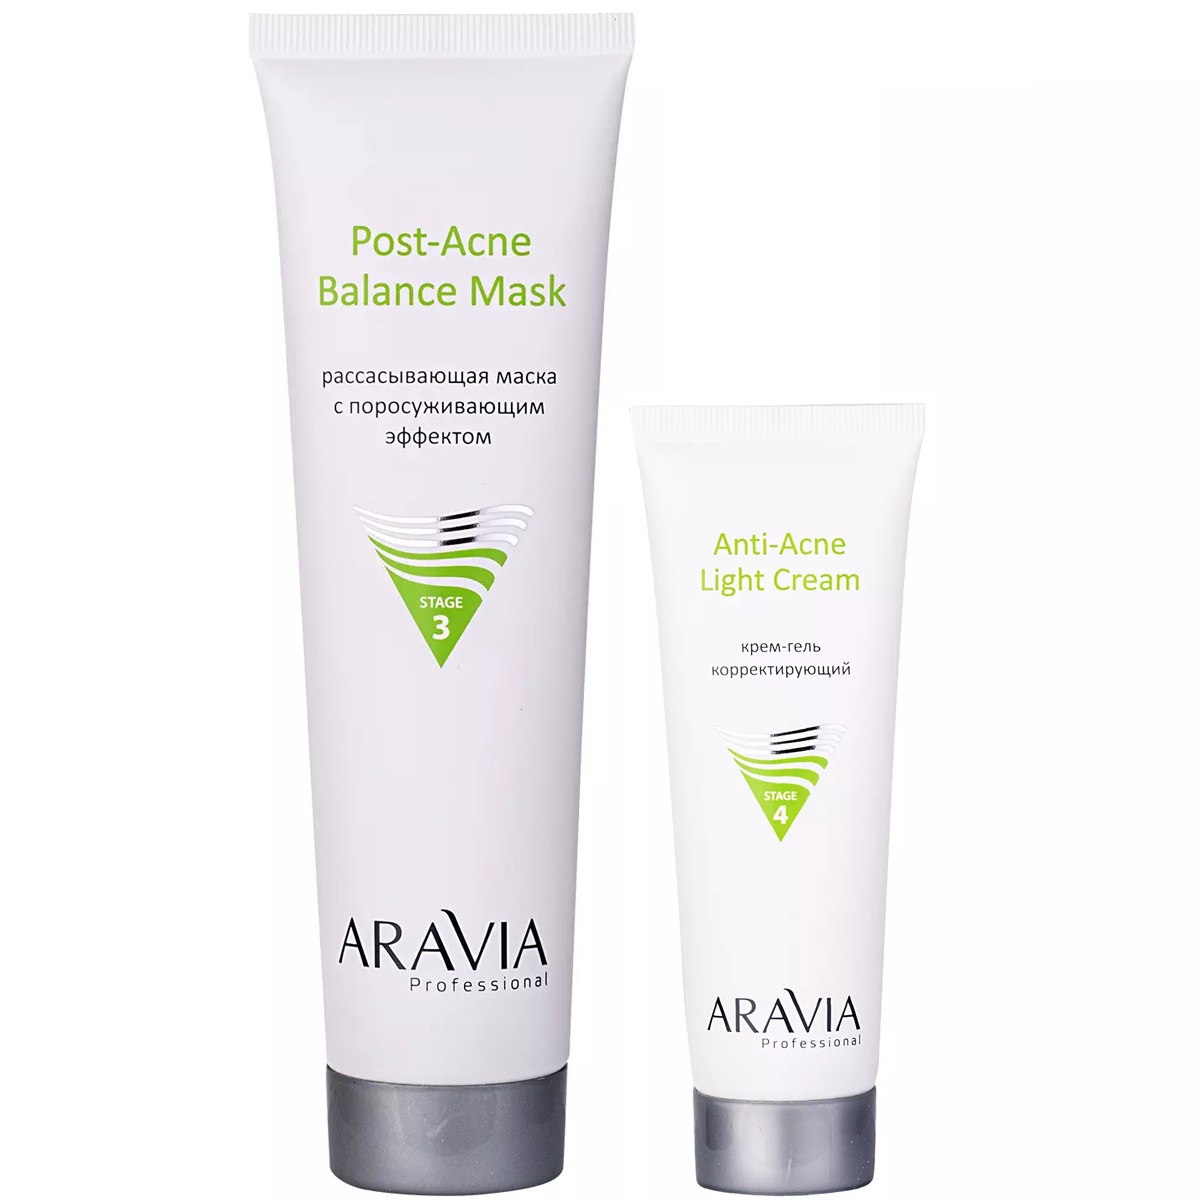 Aravia Professional Набор для проблемной и жирной кожи: маска, 100 мл + крем-гель, 50 мл (Aravia Professional, Уход за лицом) rere набор косметики для проблемной и жирной кожи